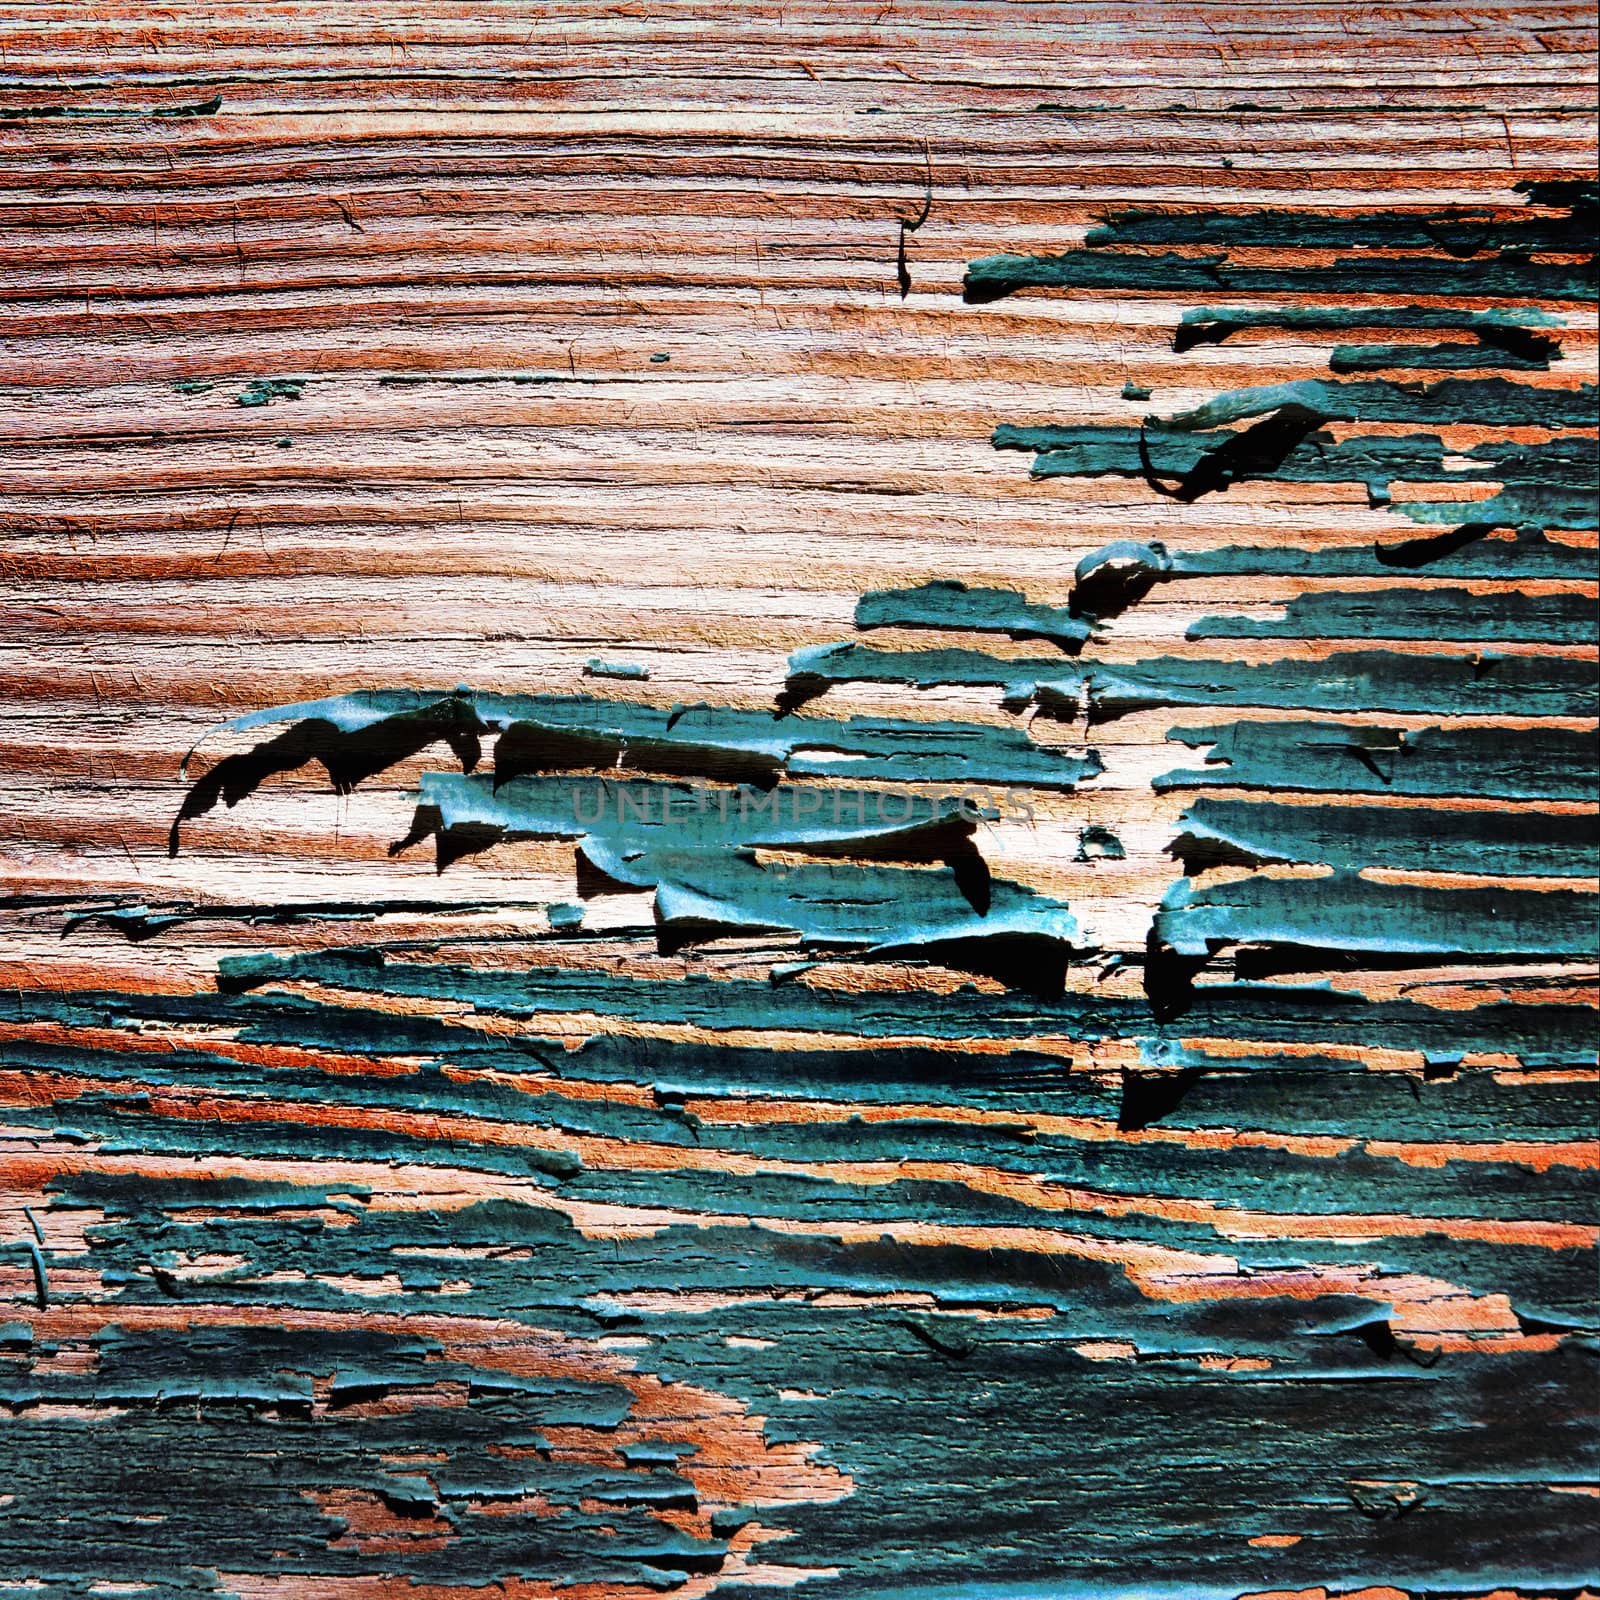  Old painted wooden boards.  by vladimir_sklyarov